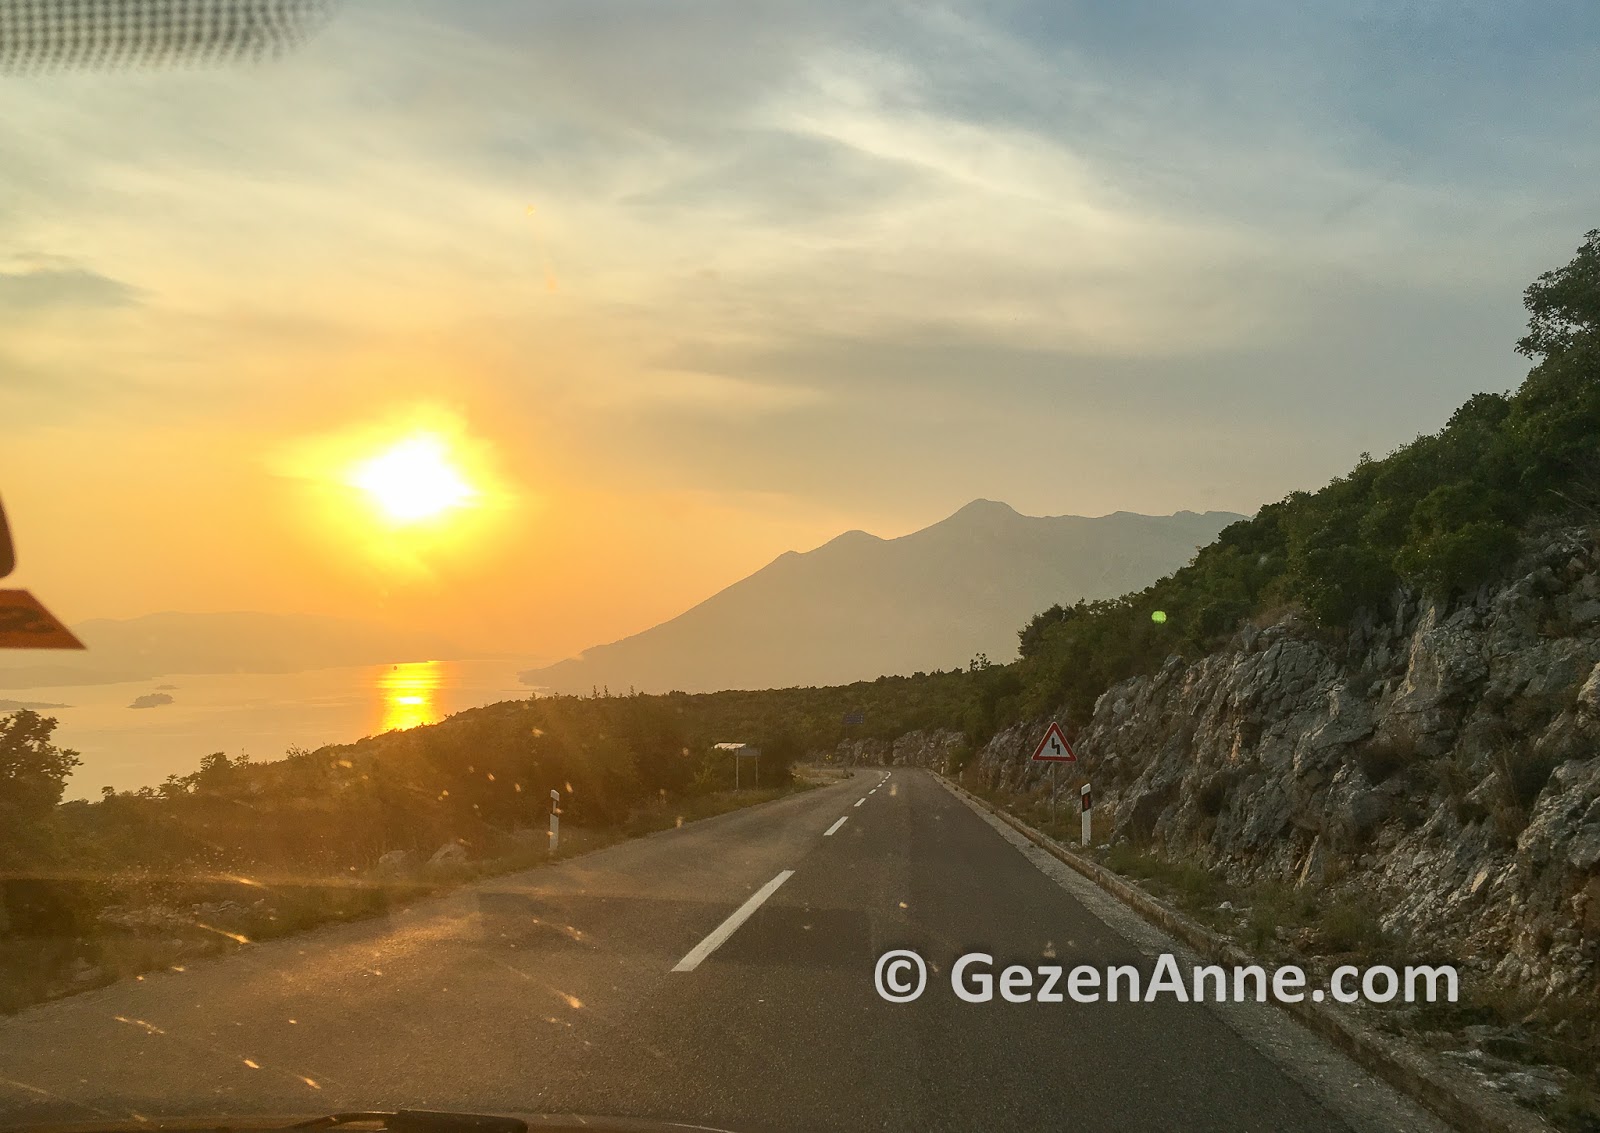 Driving to Orebic through Peljesac peninsula, Croatia